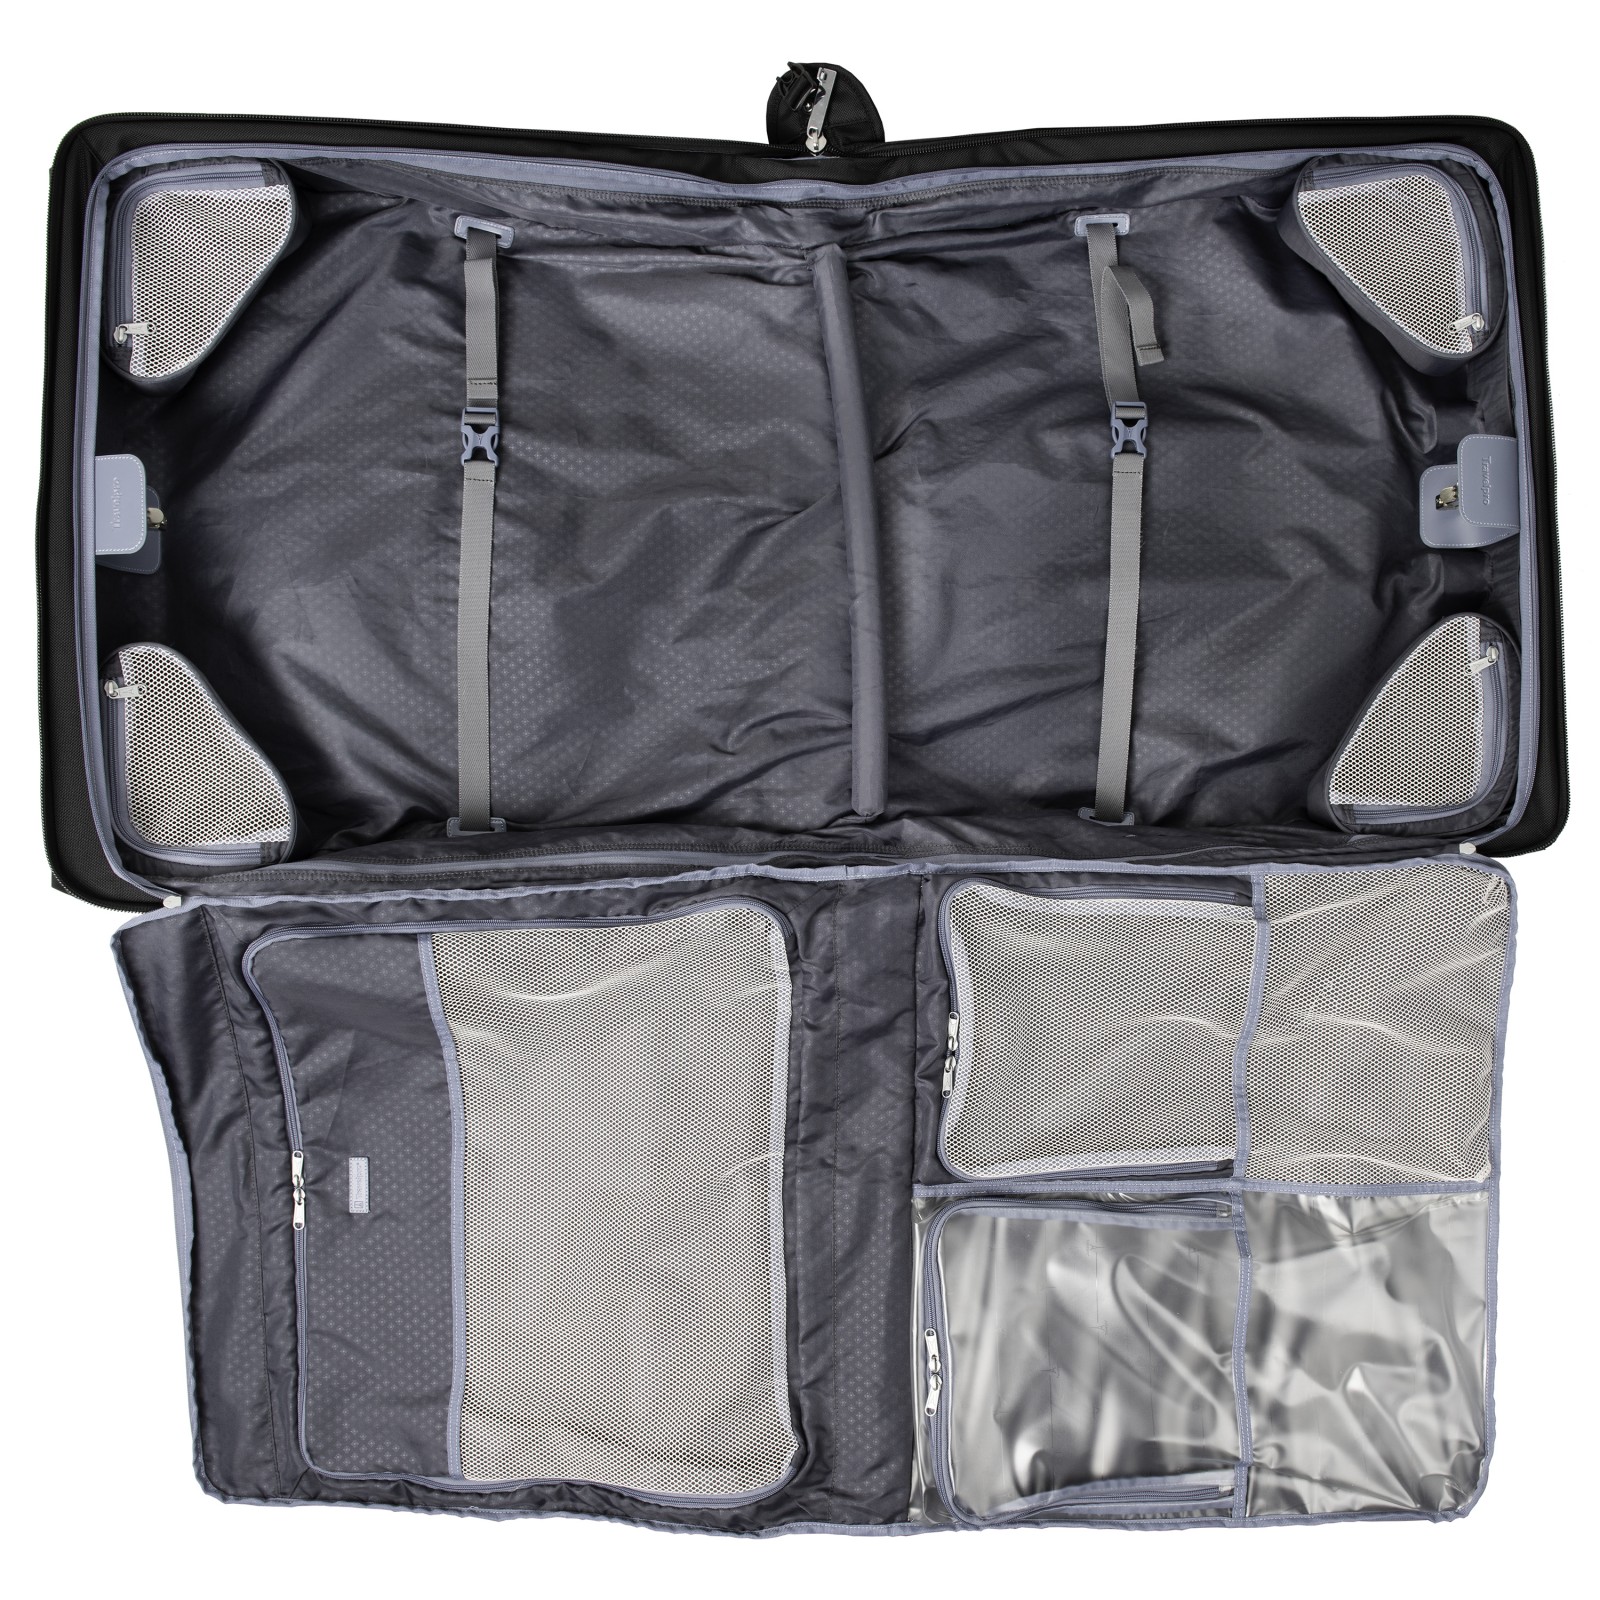 Travelpro Platinum Elite 50&quot; Rolling Garment Bag • 4091851 • Luggage World MN